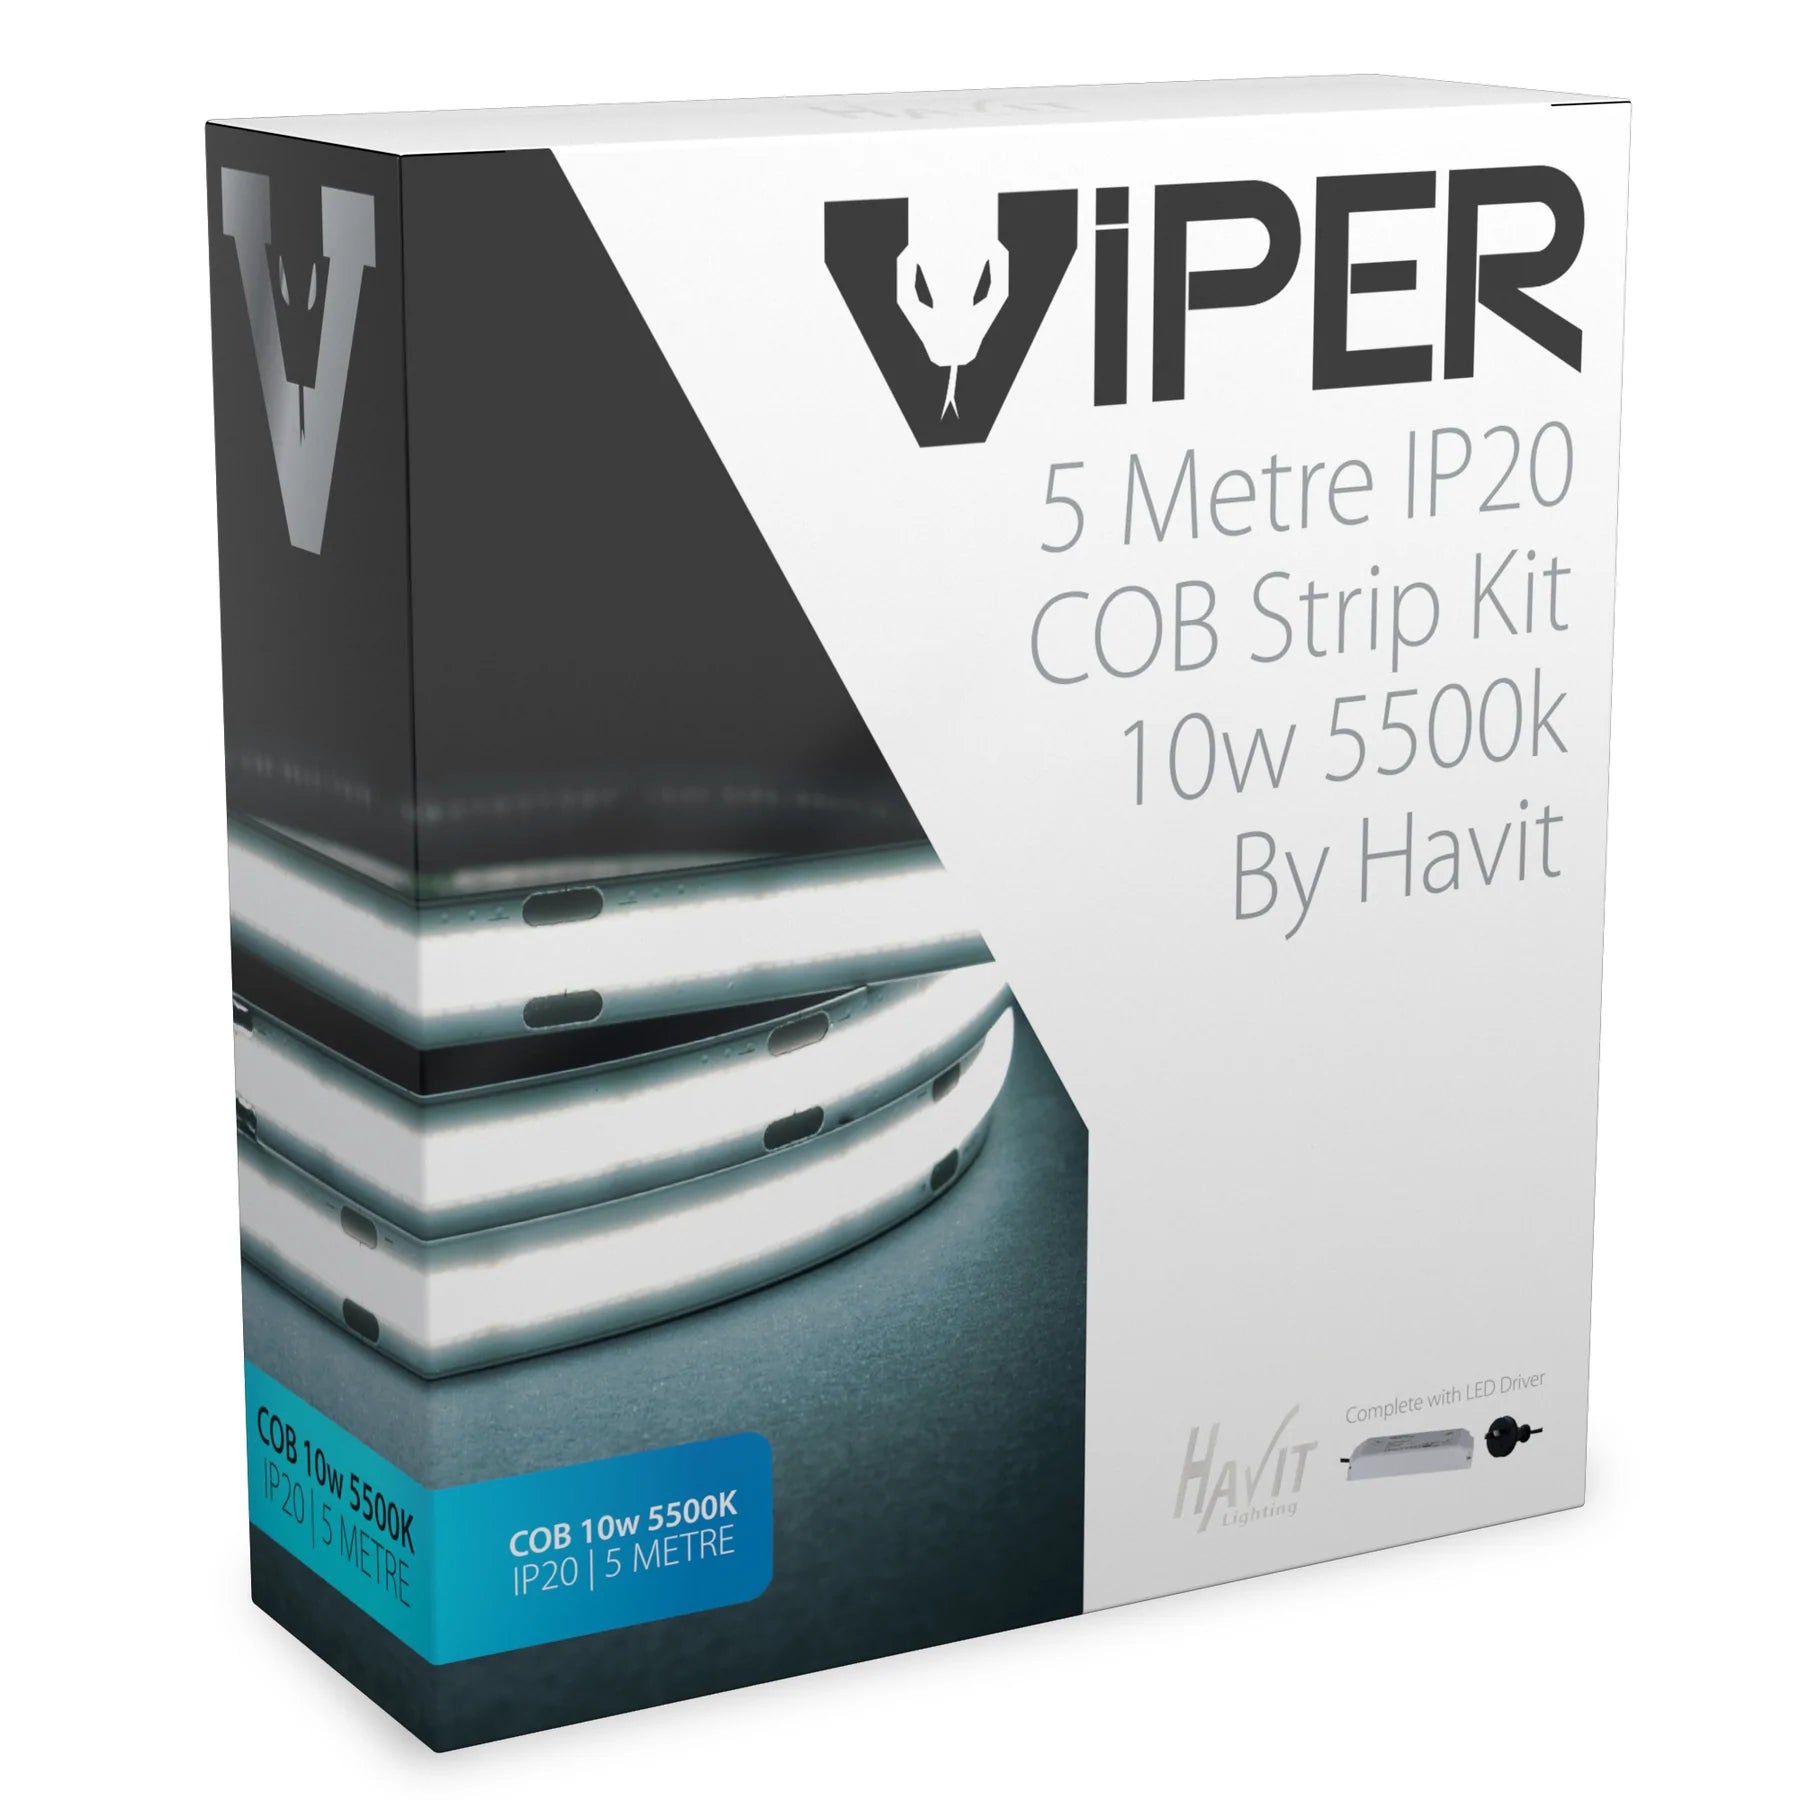 Havit VPR9764IP20-512-5M COB VIPER 10w 5m LED Strip kit 5500k